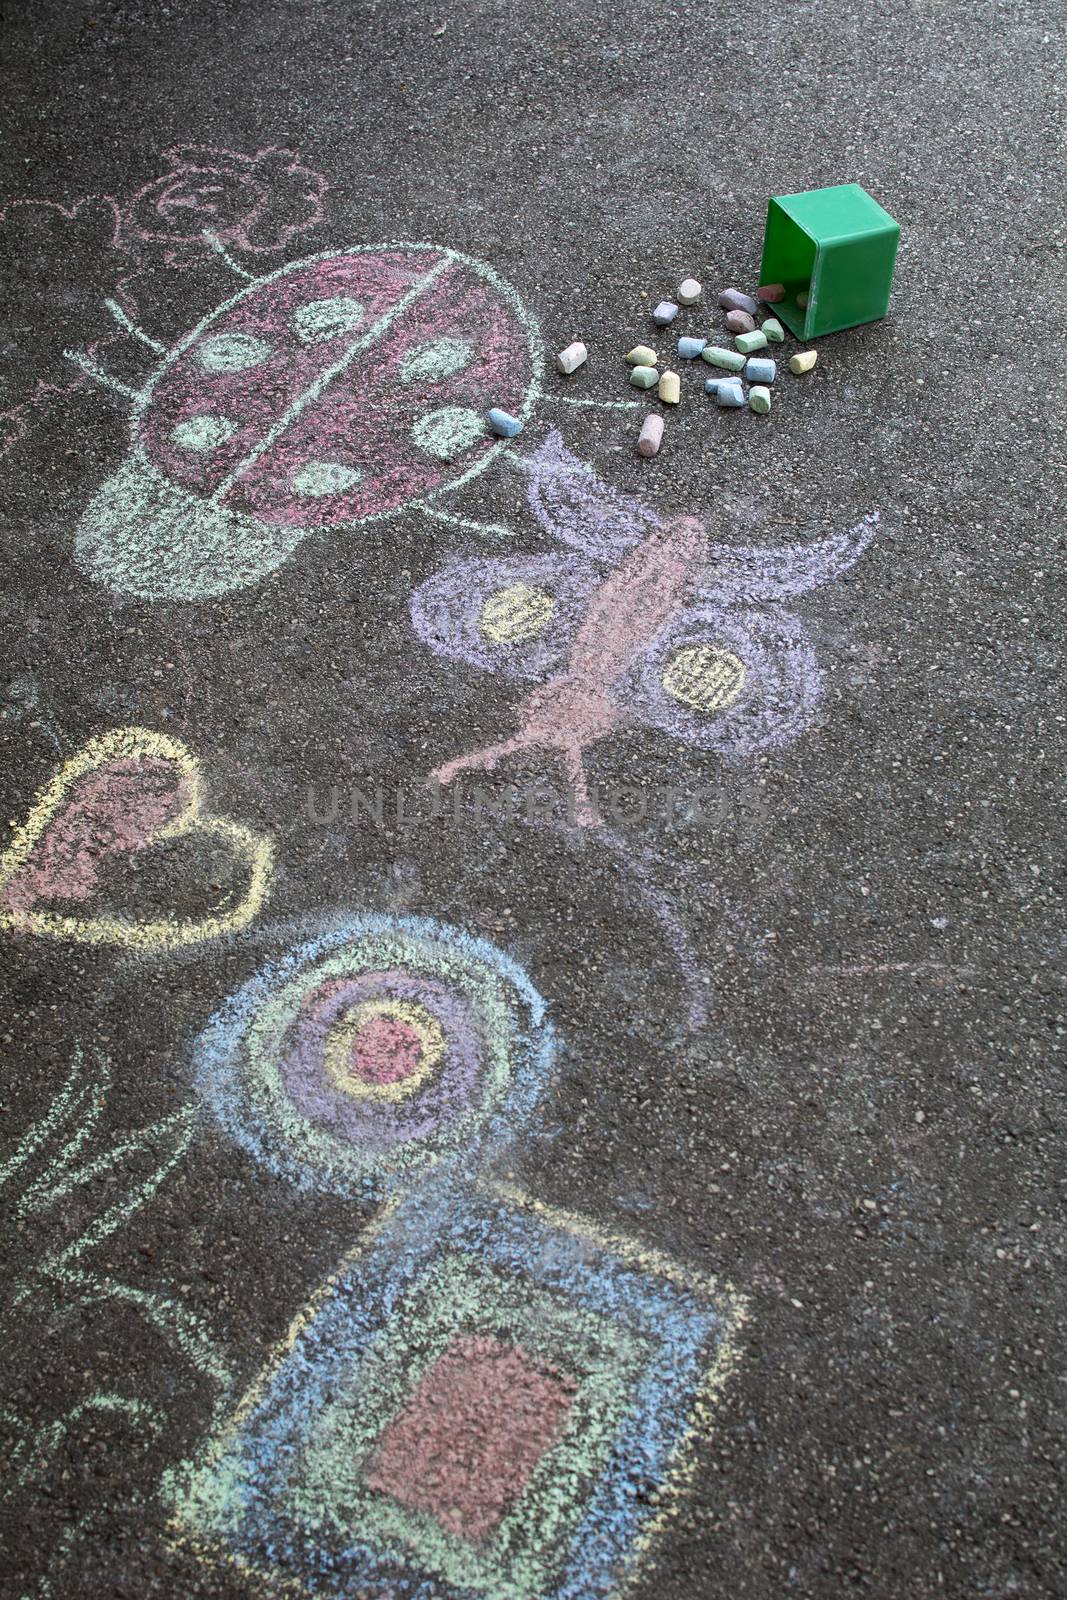 Kids were drawing on an asphalt.